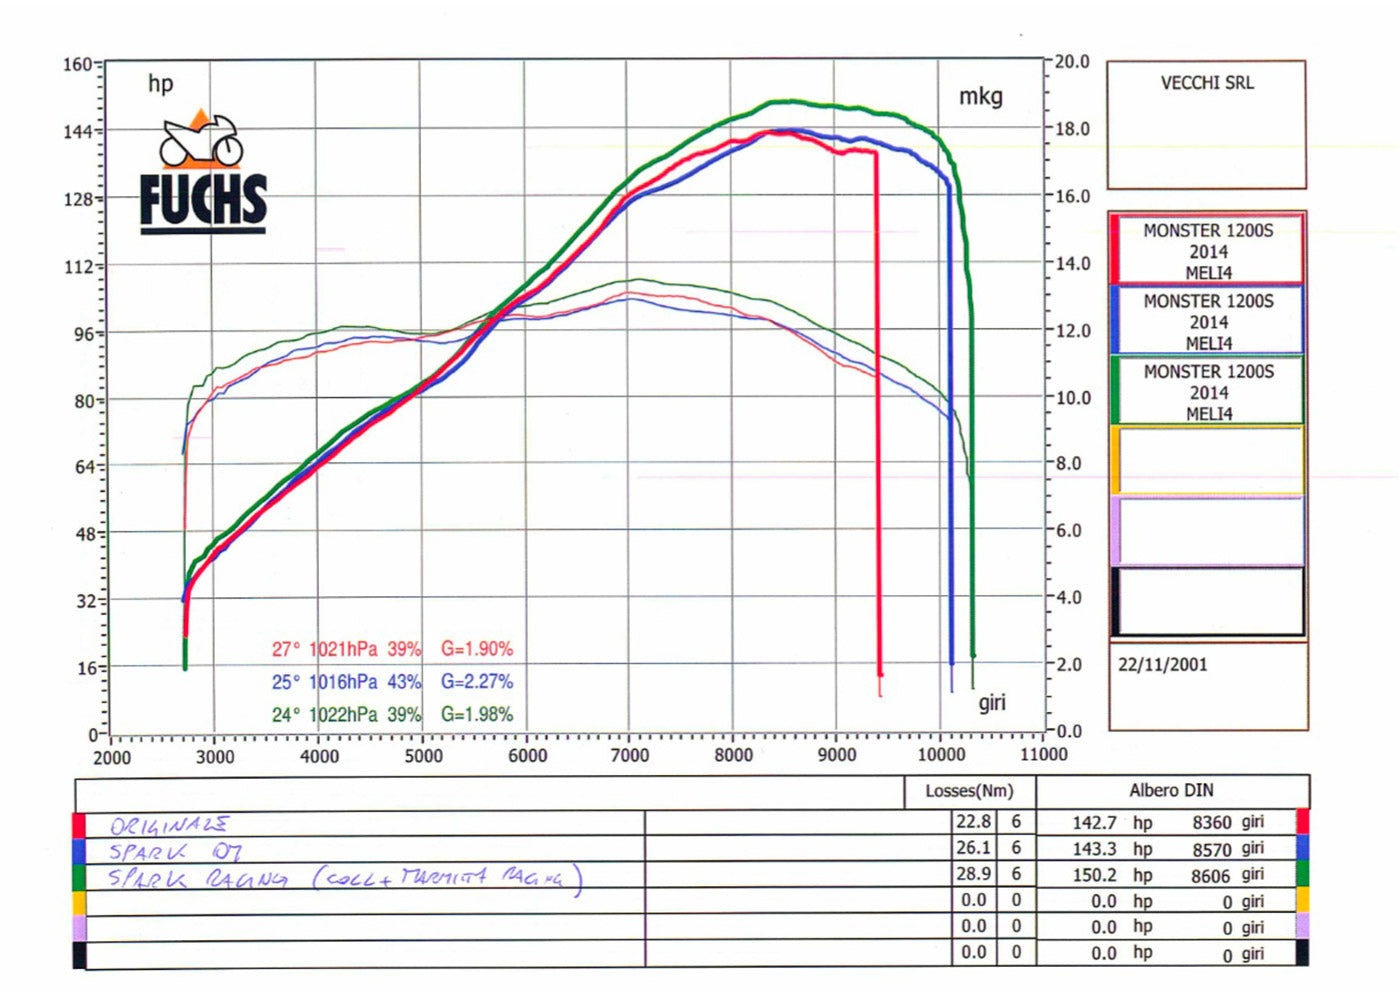 SPARK GDU8517 Ducati Monster 1200 / 821 (14/17) Titanium Exhaust Collector (racing)